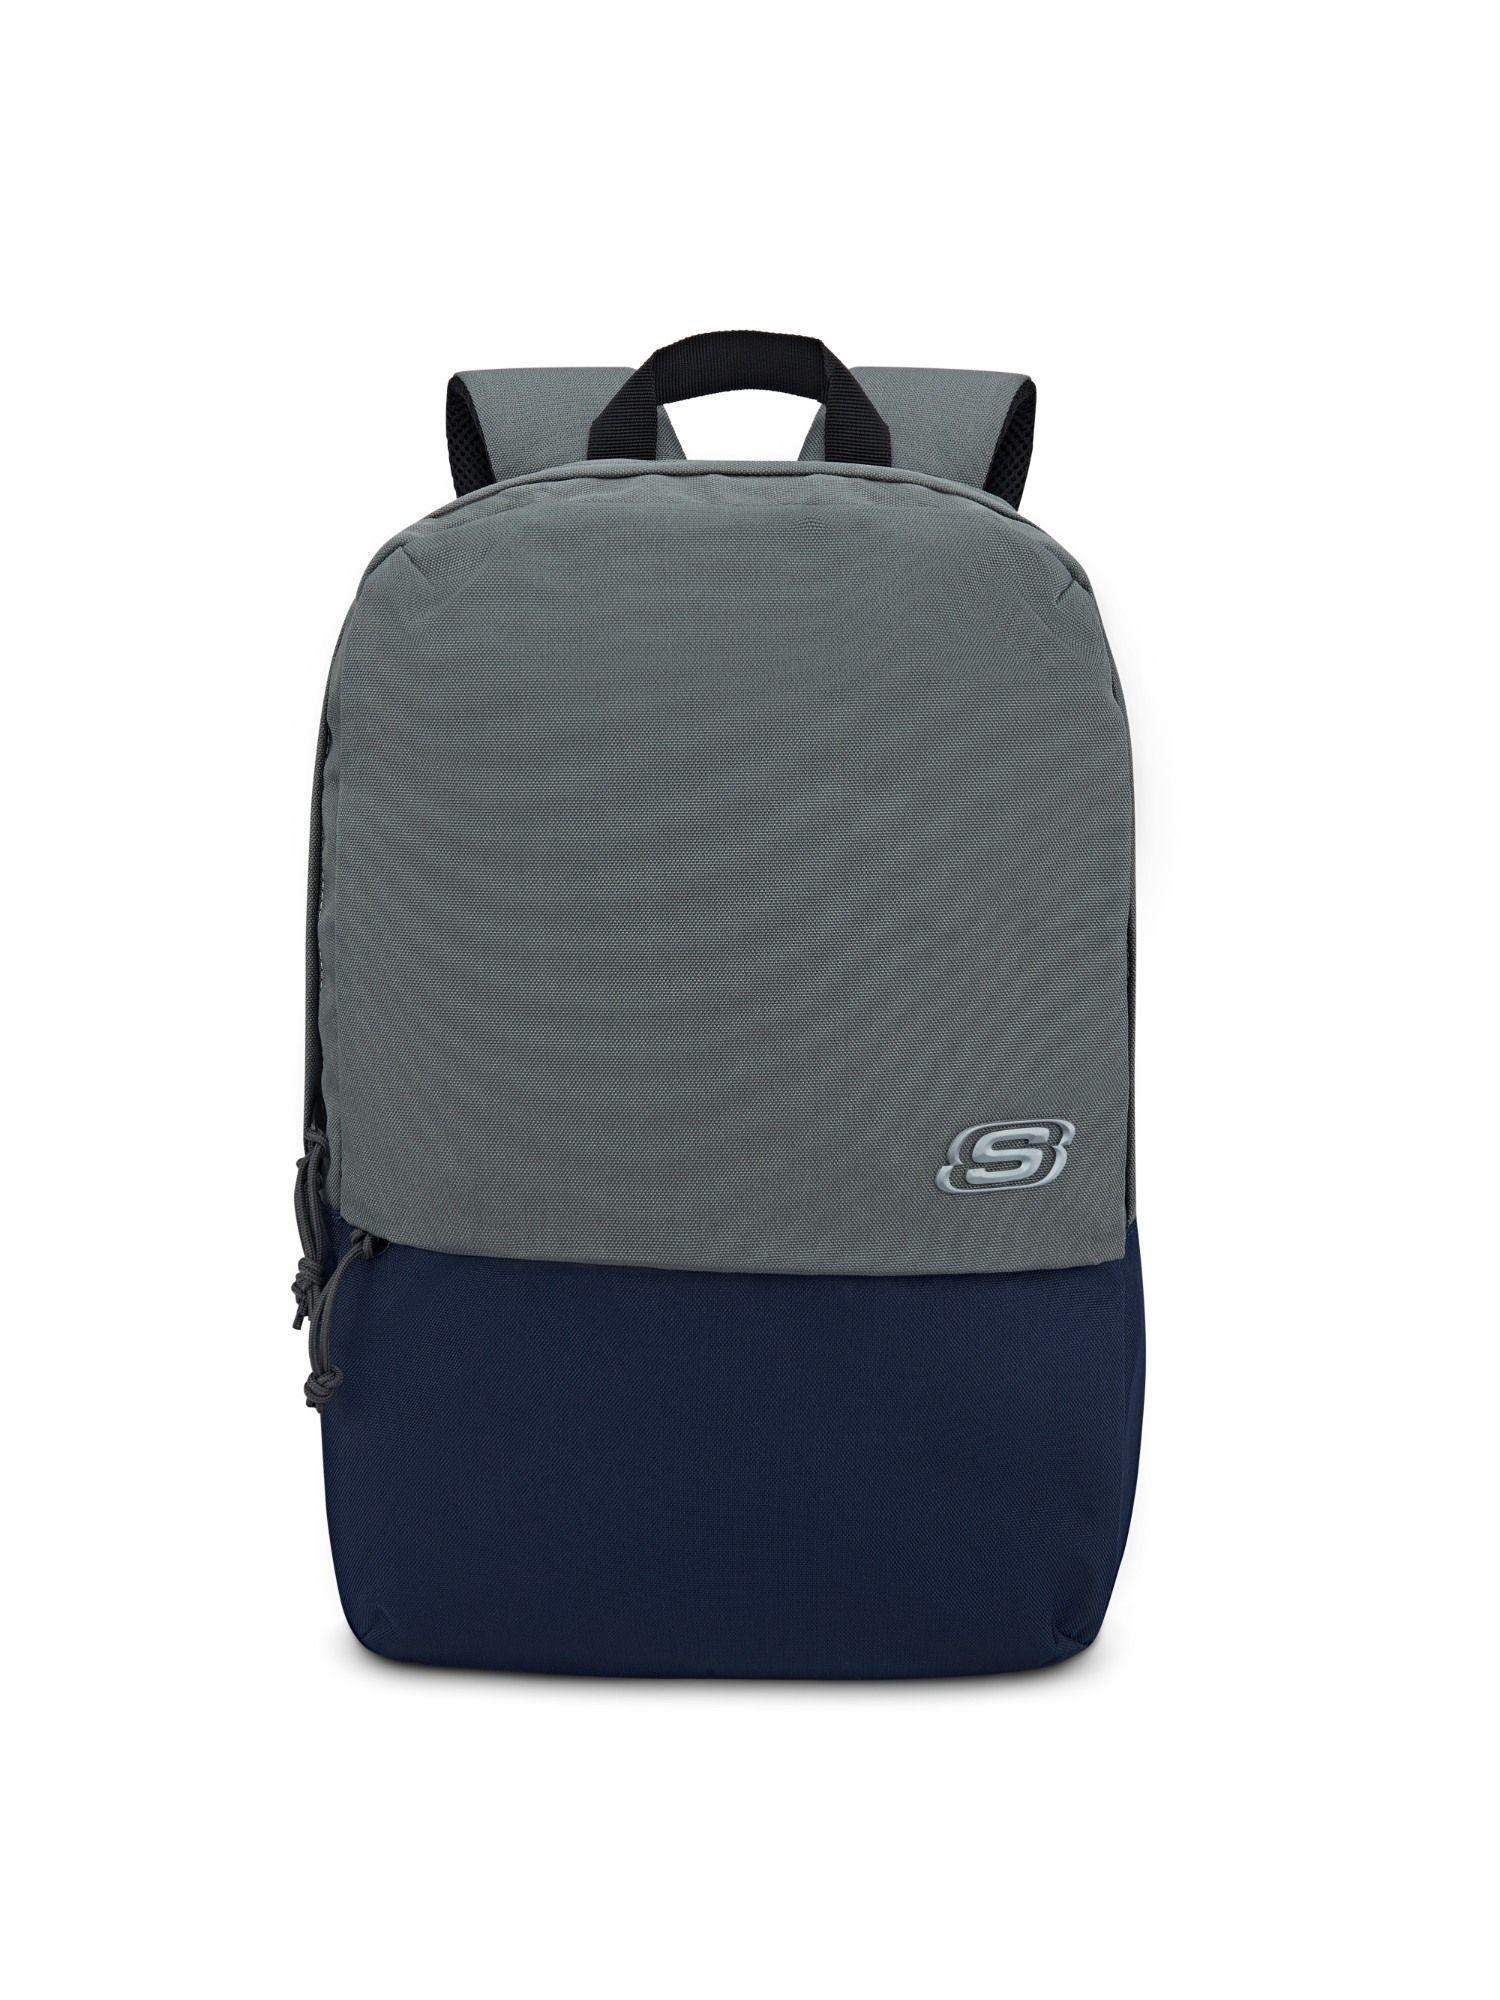 unisex backpack - grey